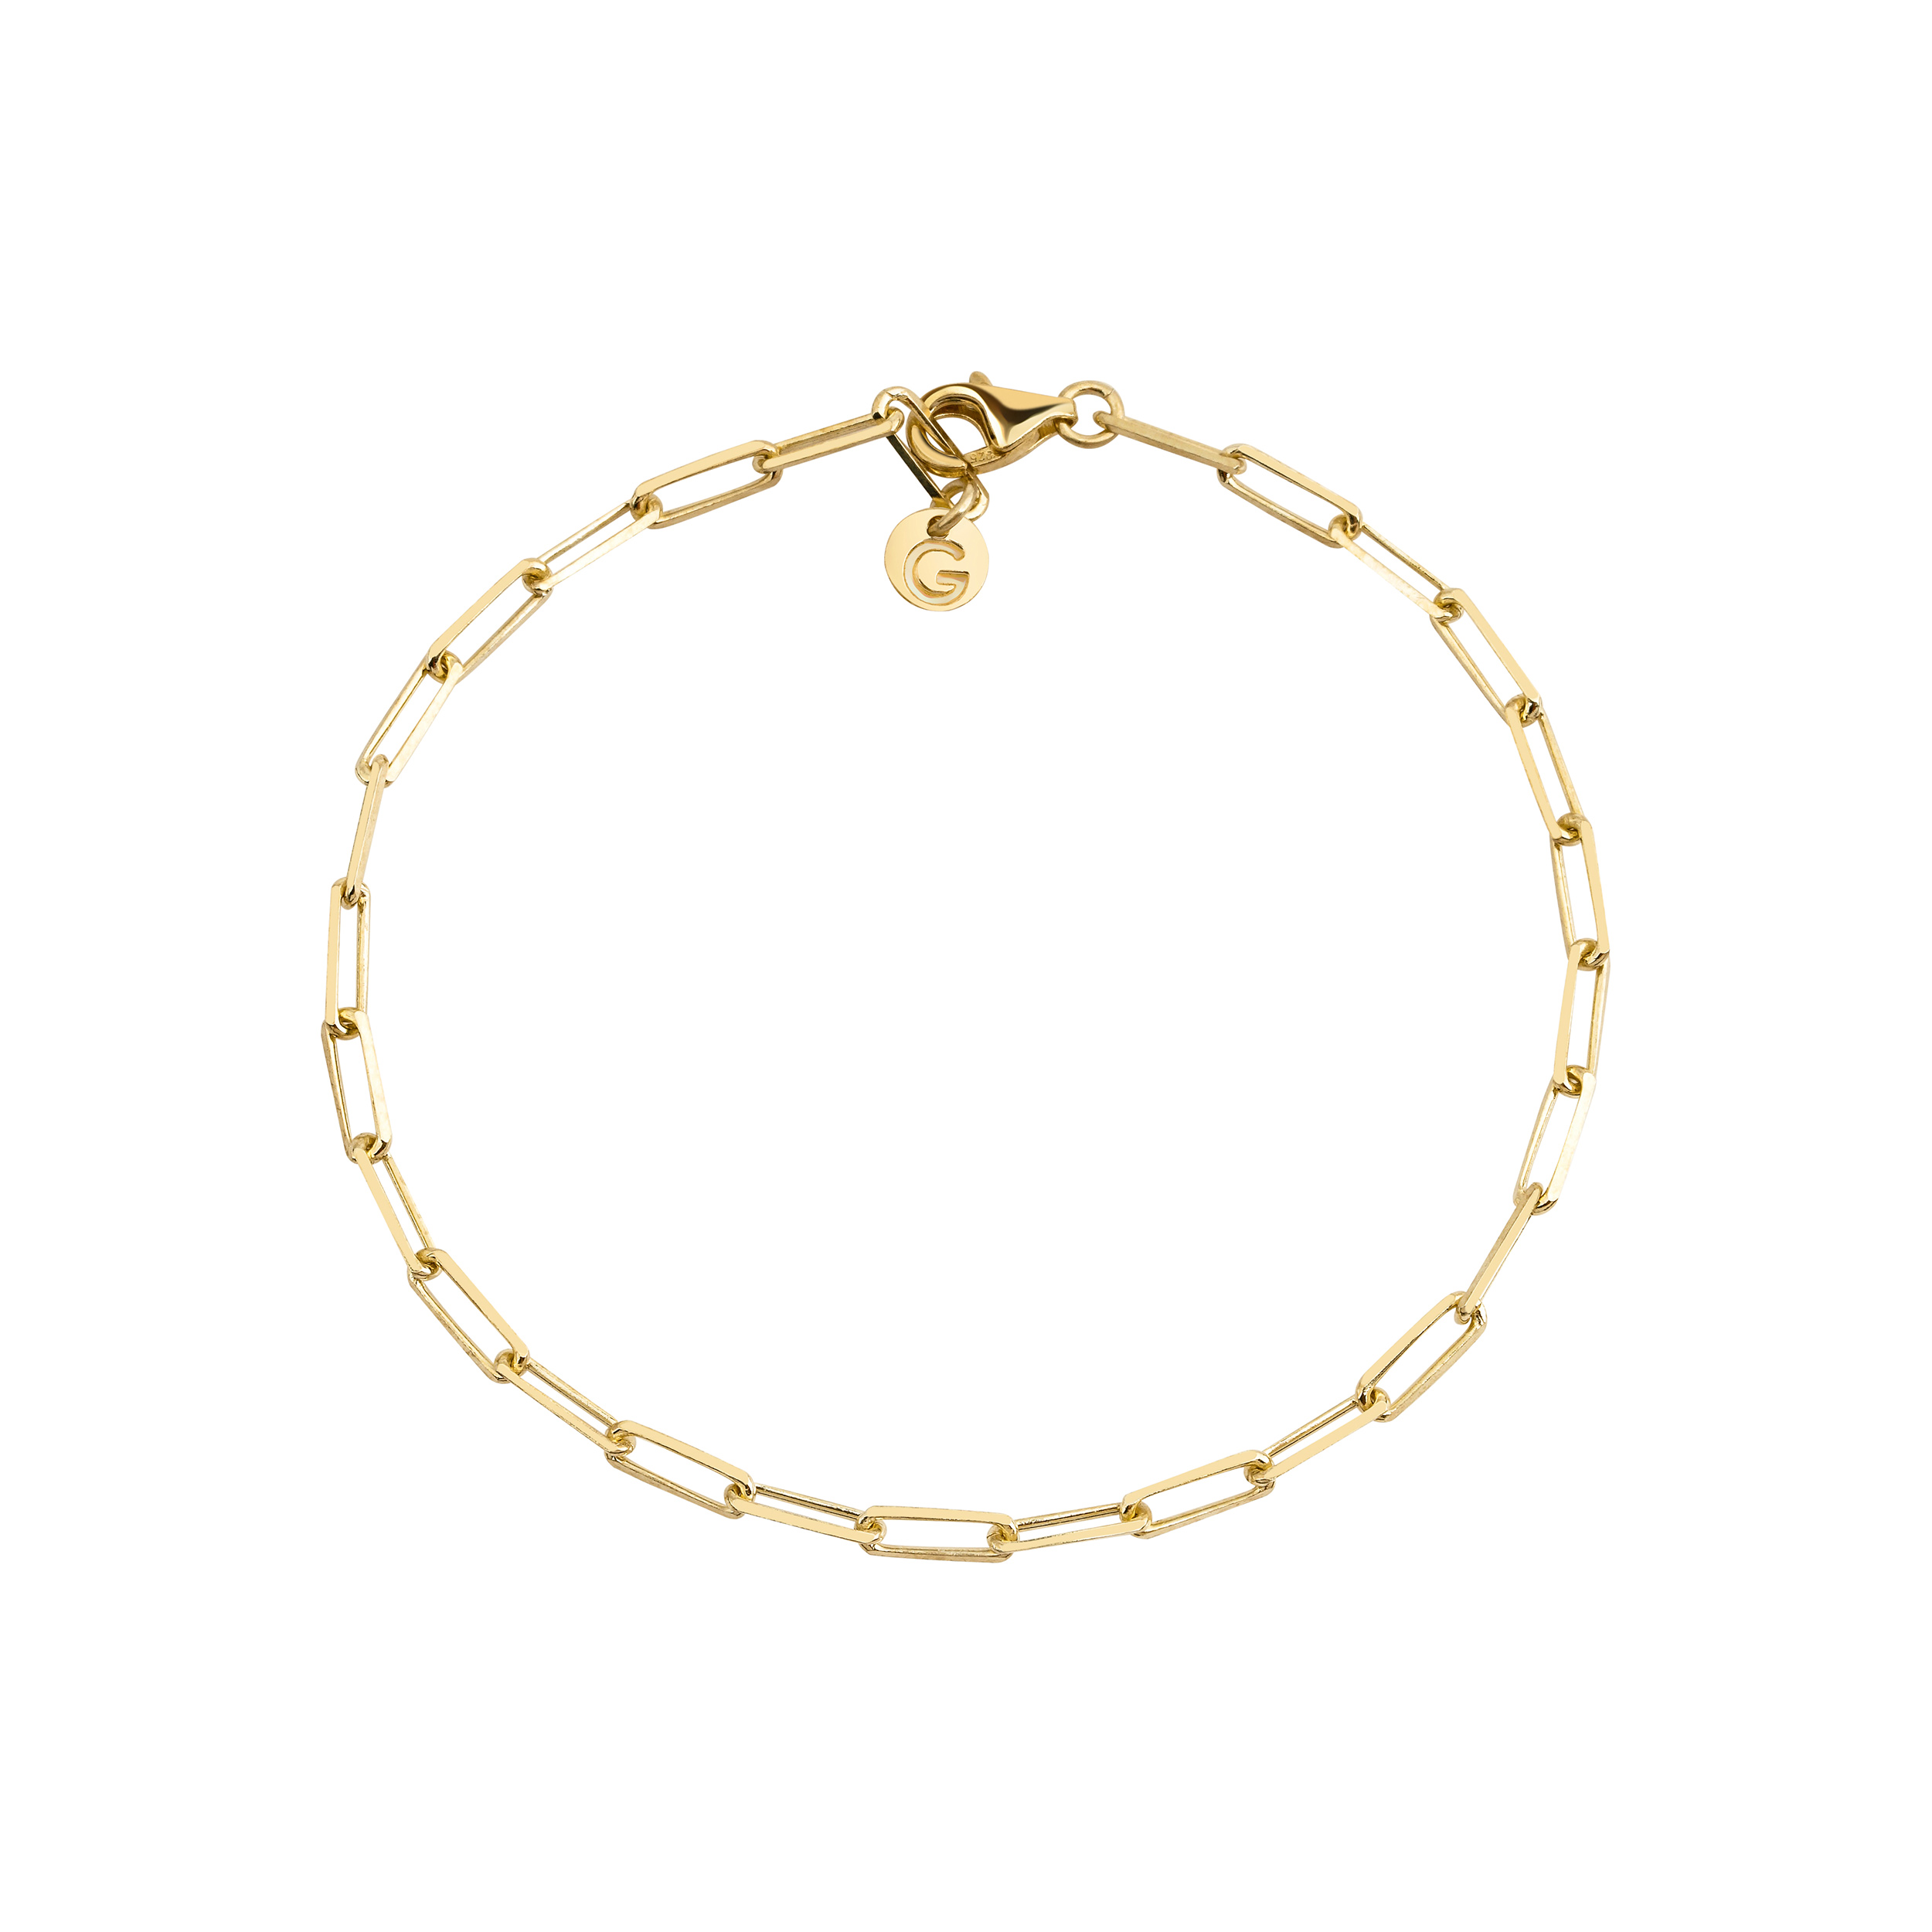 David Yurman DY Madison Chain Bracelet with 18K Yellow Gold | REEDS Jewelers